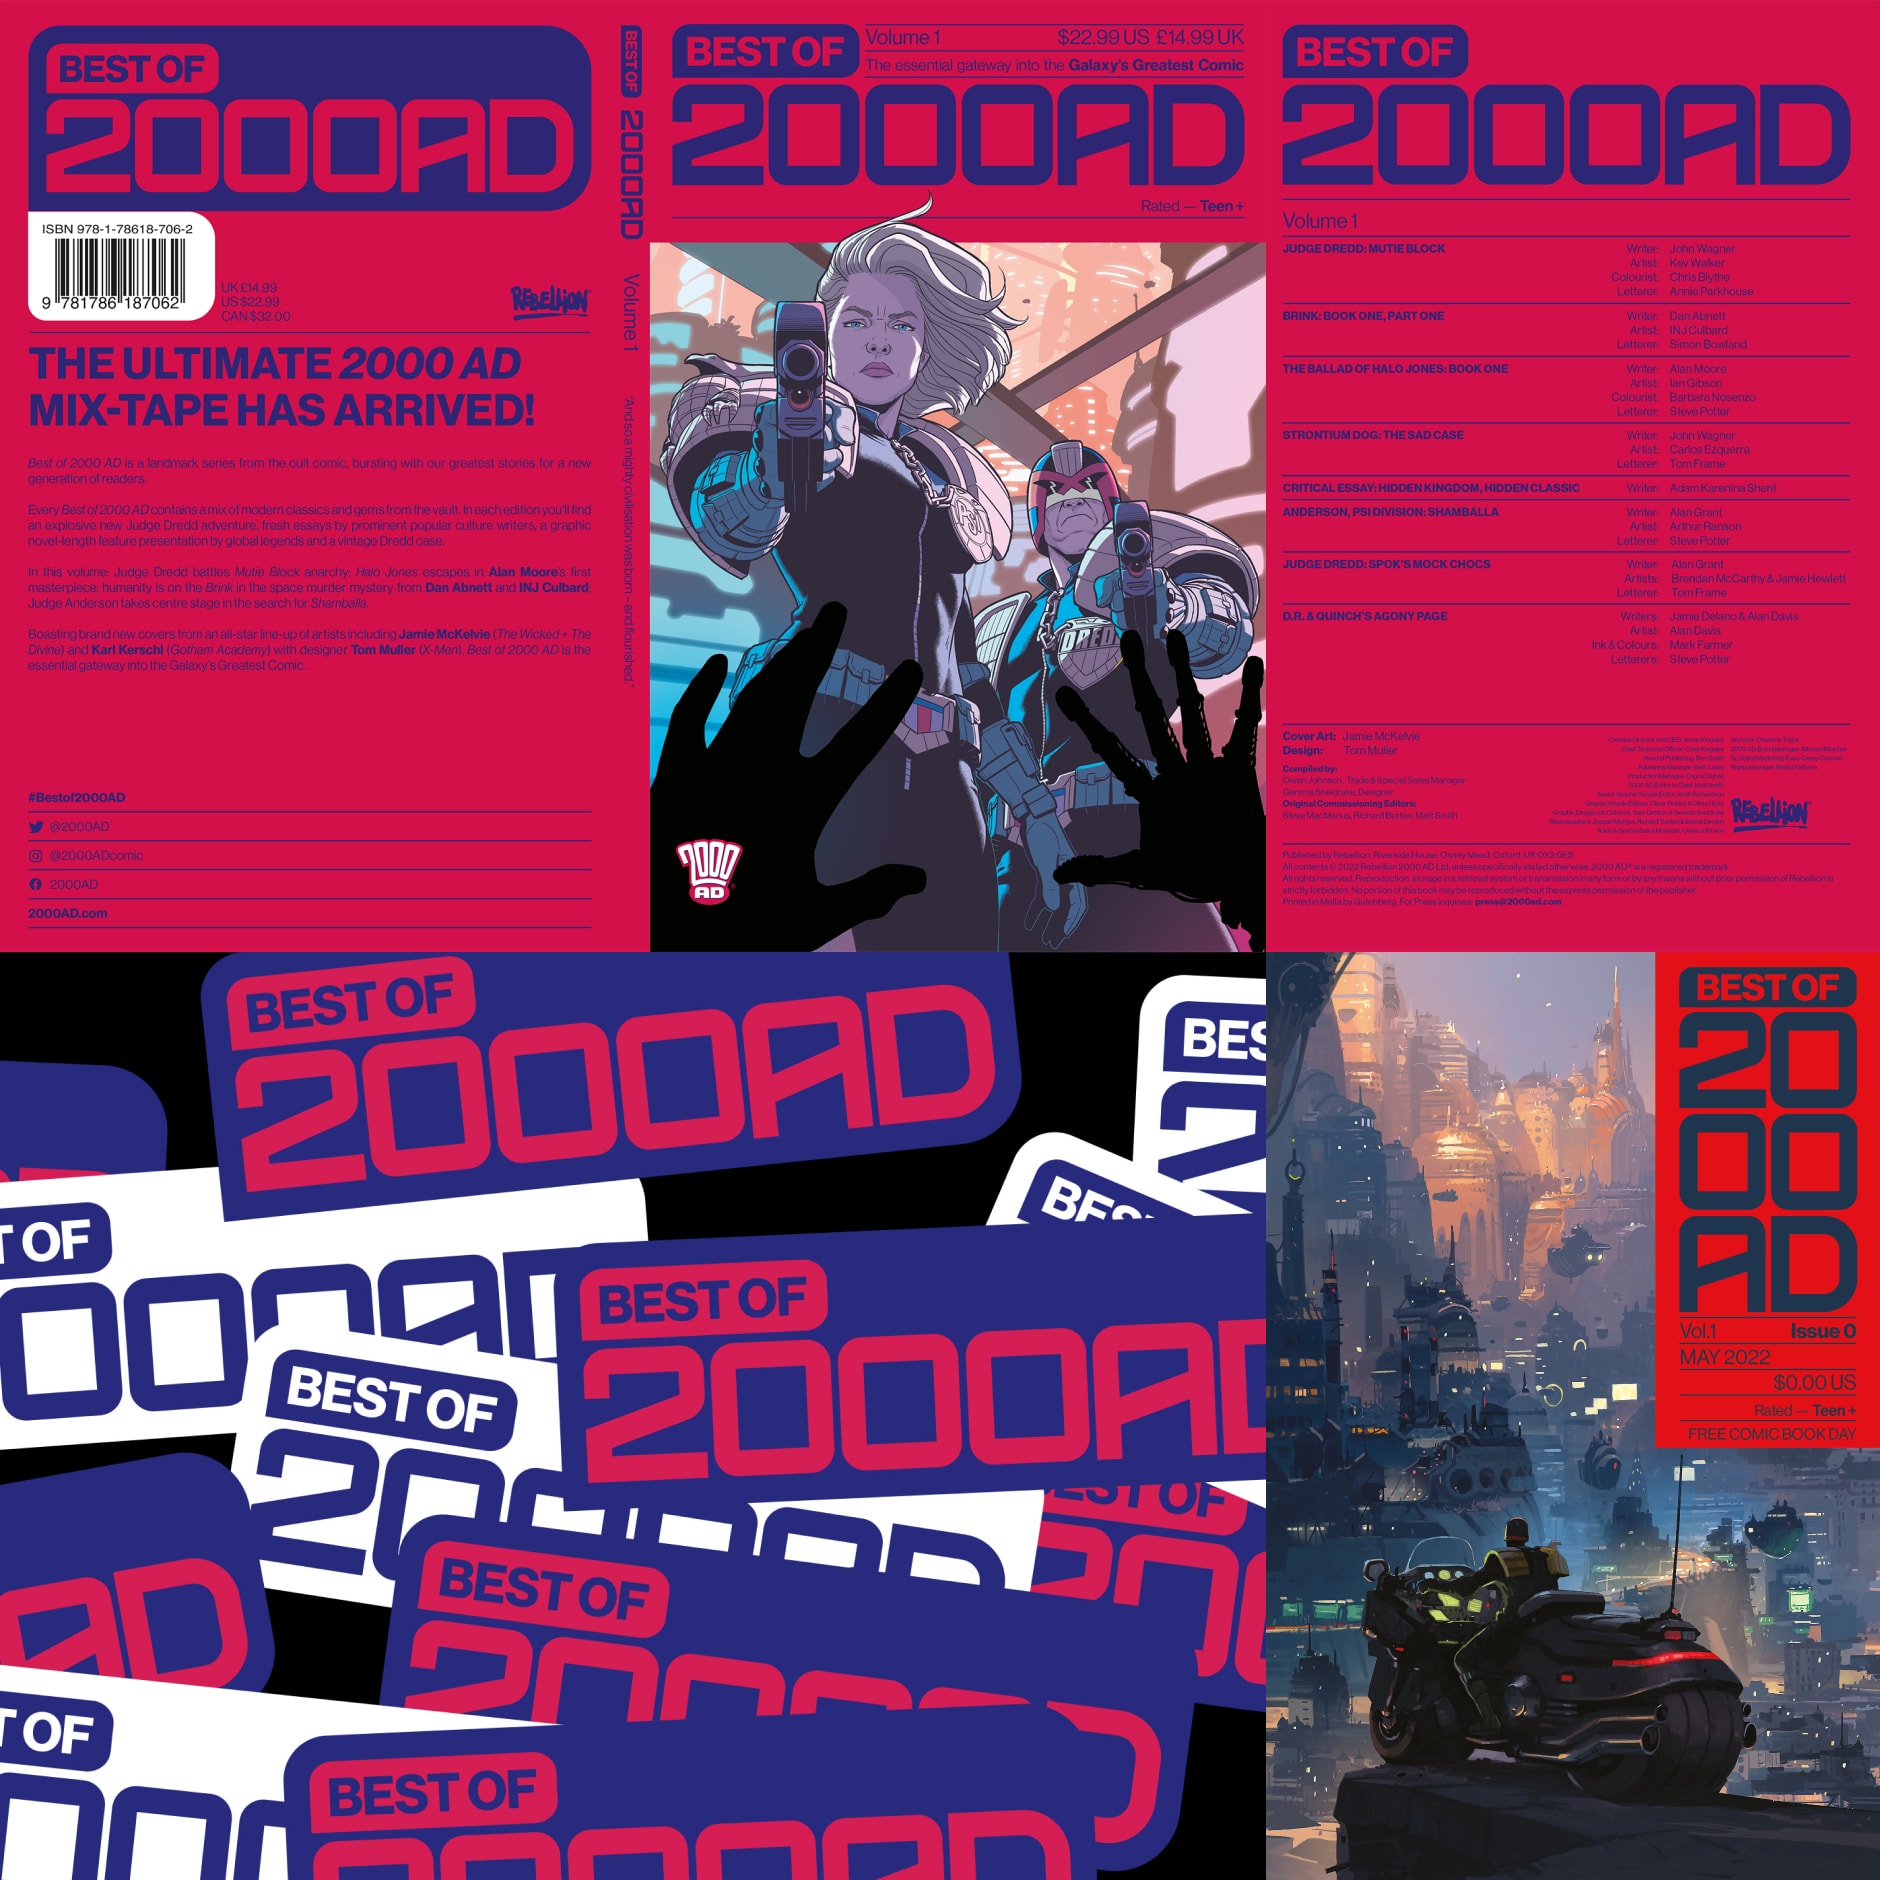 Best of 2000 AD Vol 1 cover design